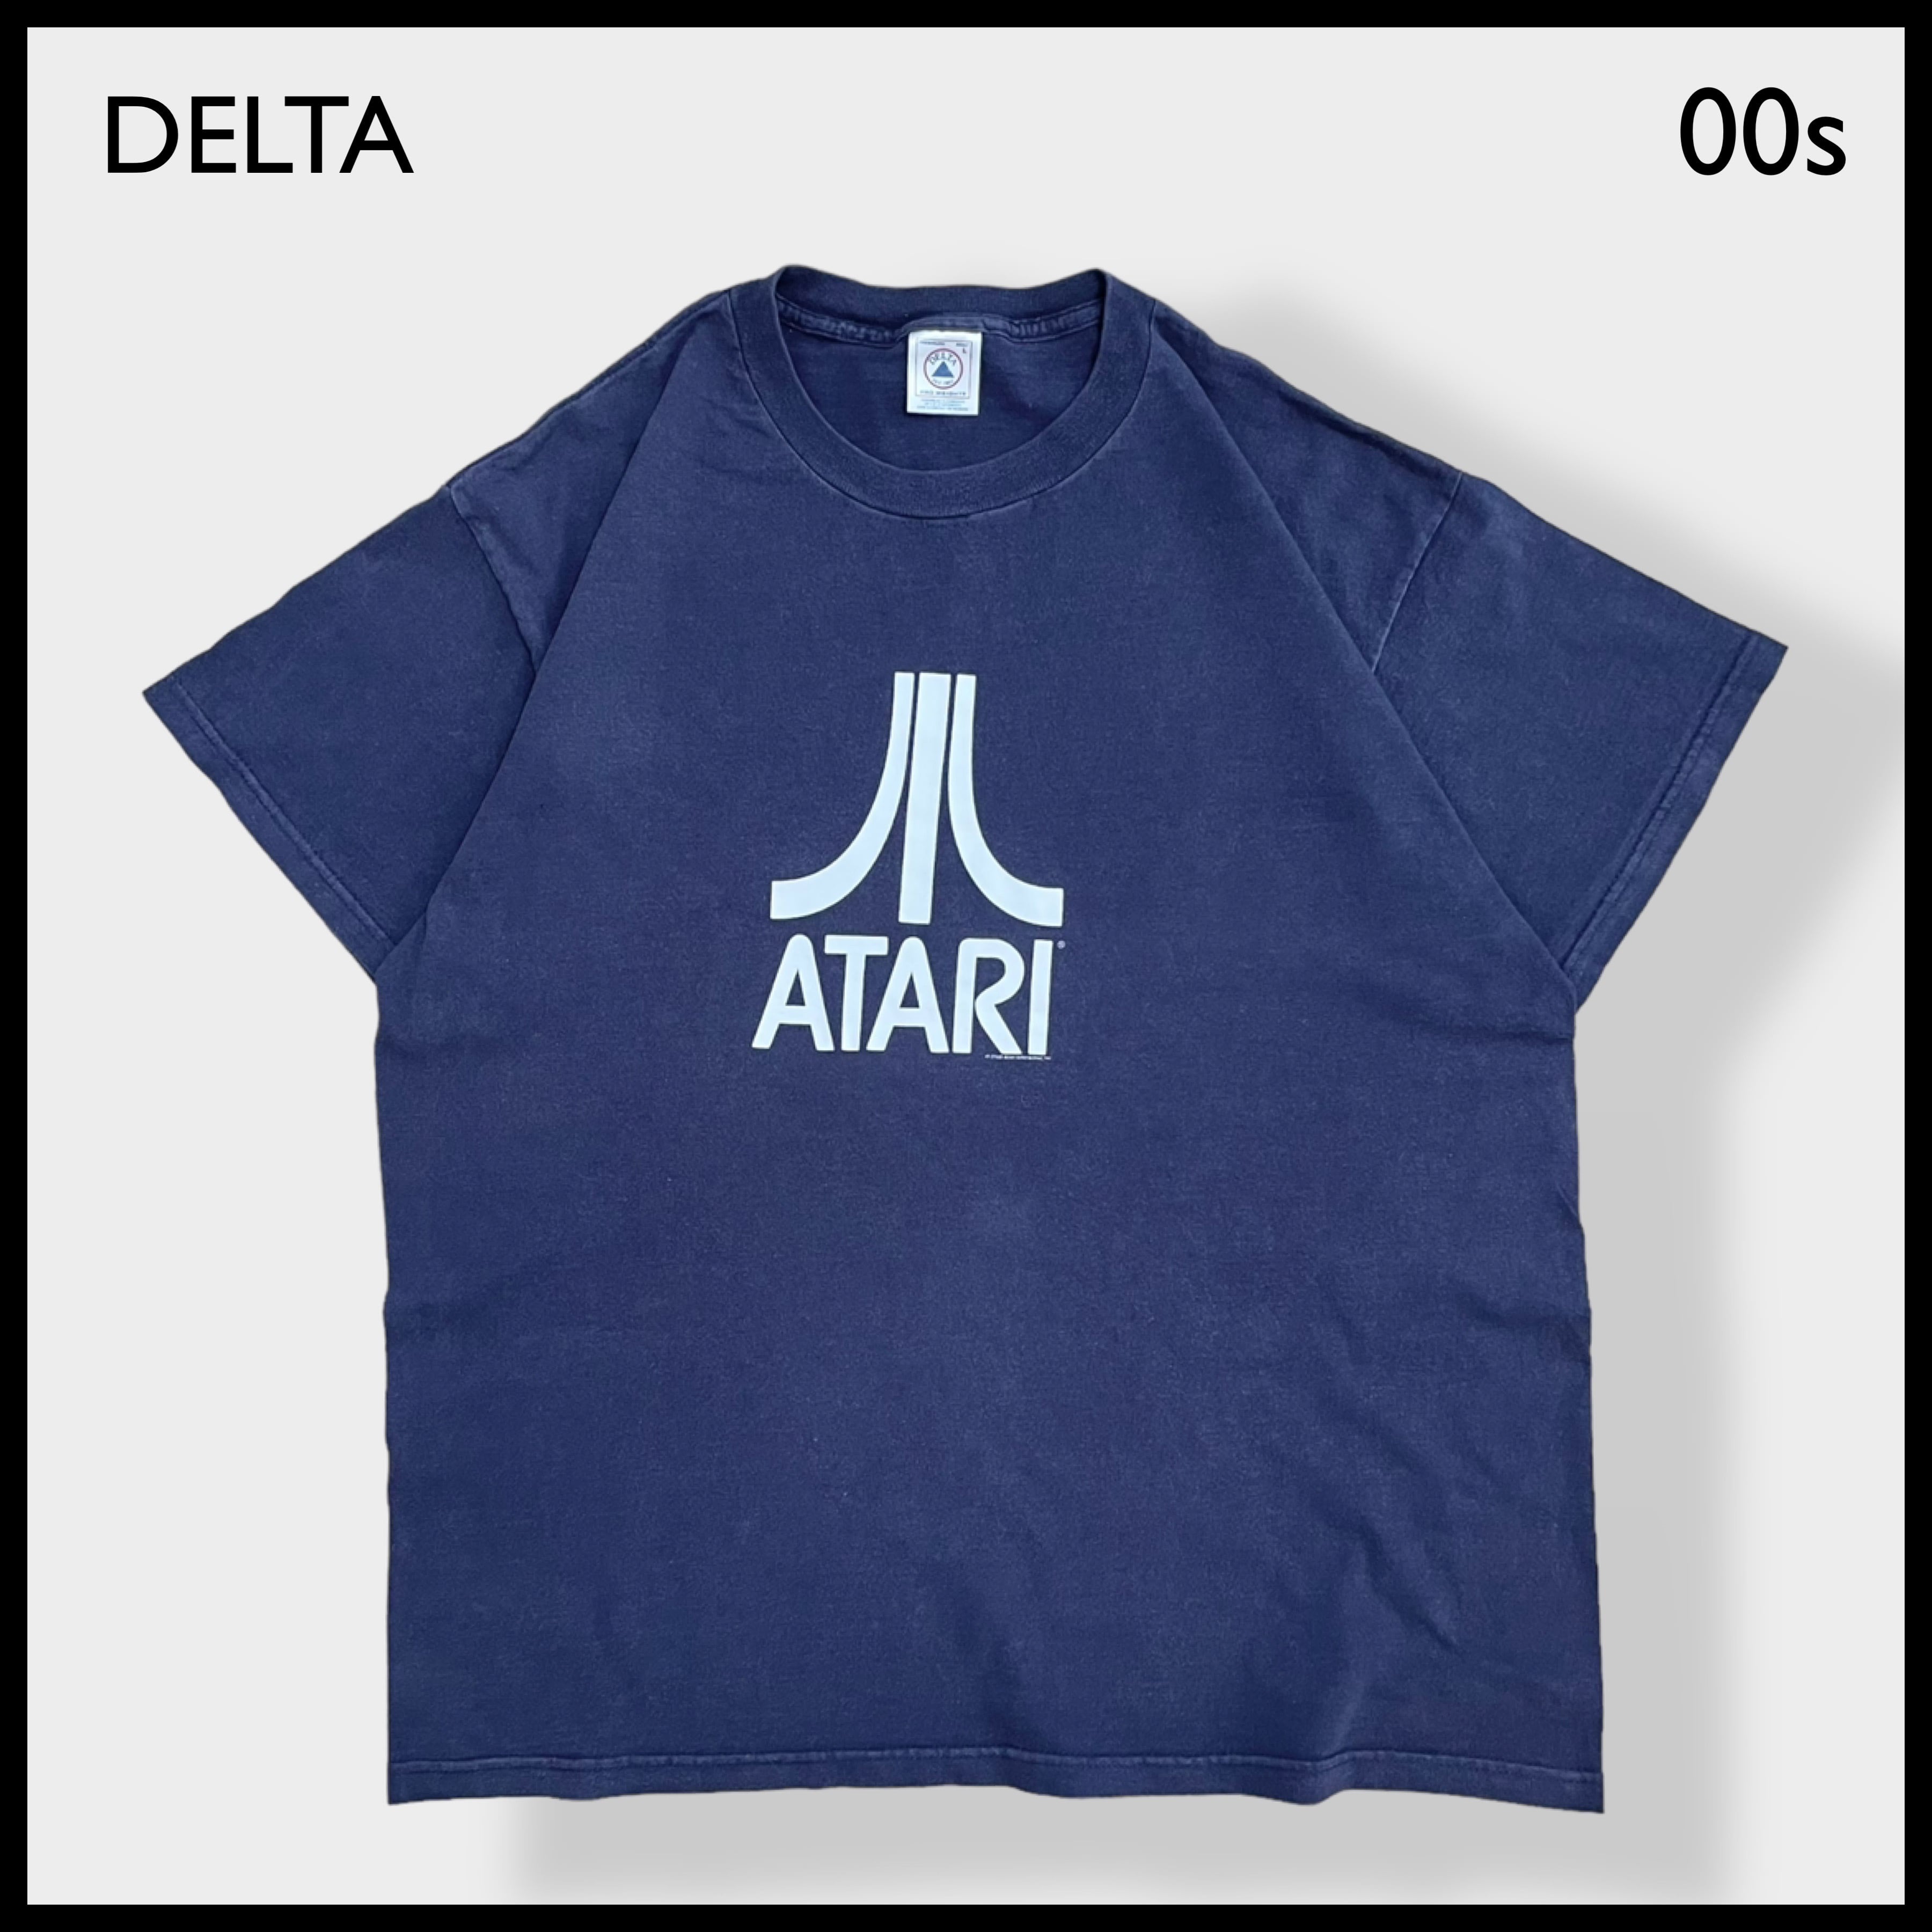 【DELTA】00s USA製 ATARI 企業系 企業ロゴ アタリ ビデオゲーム